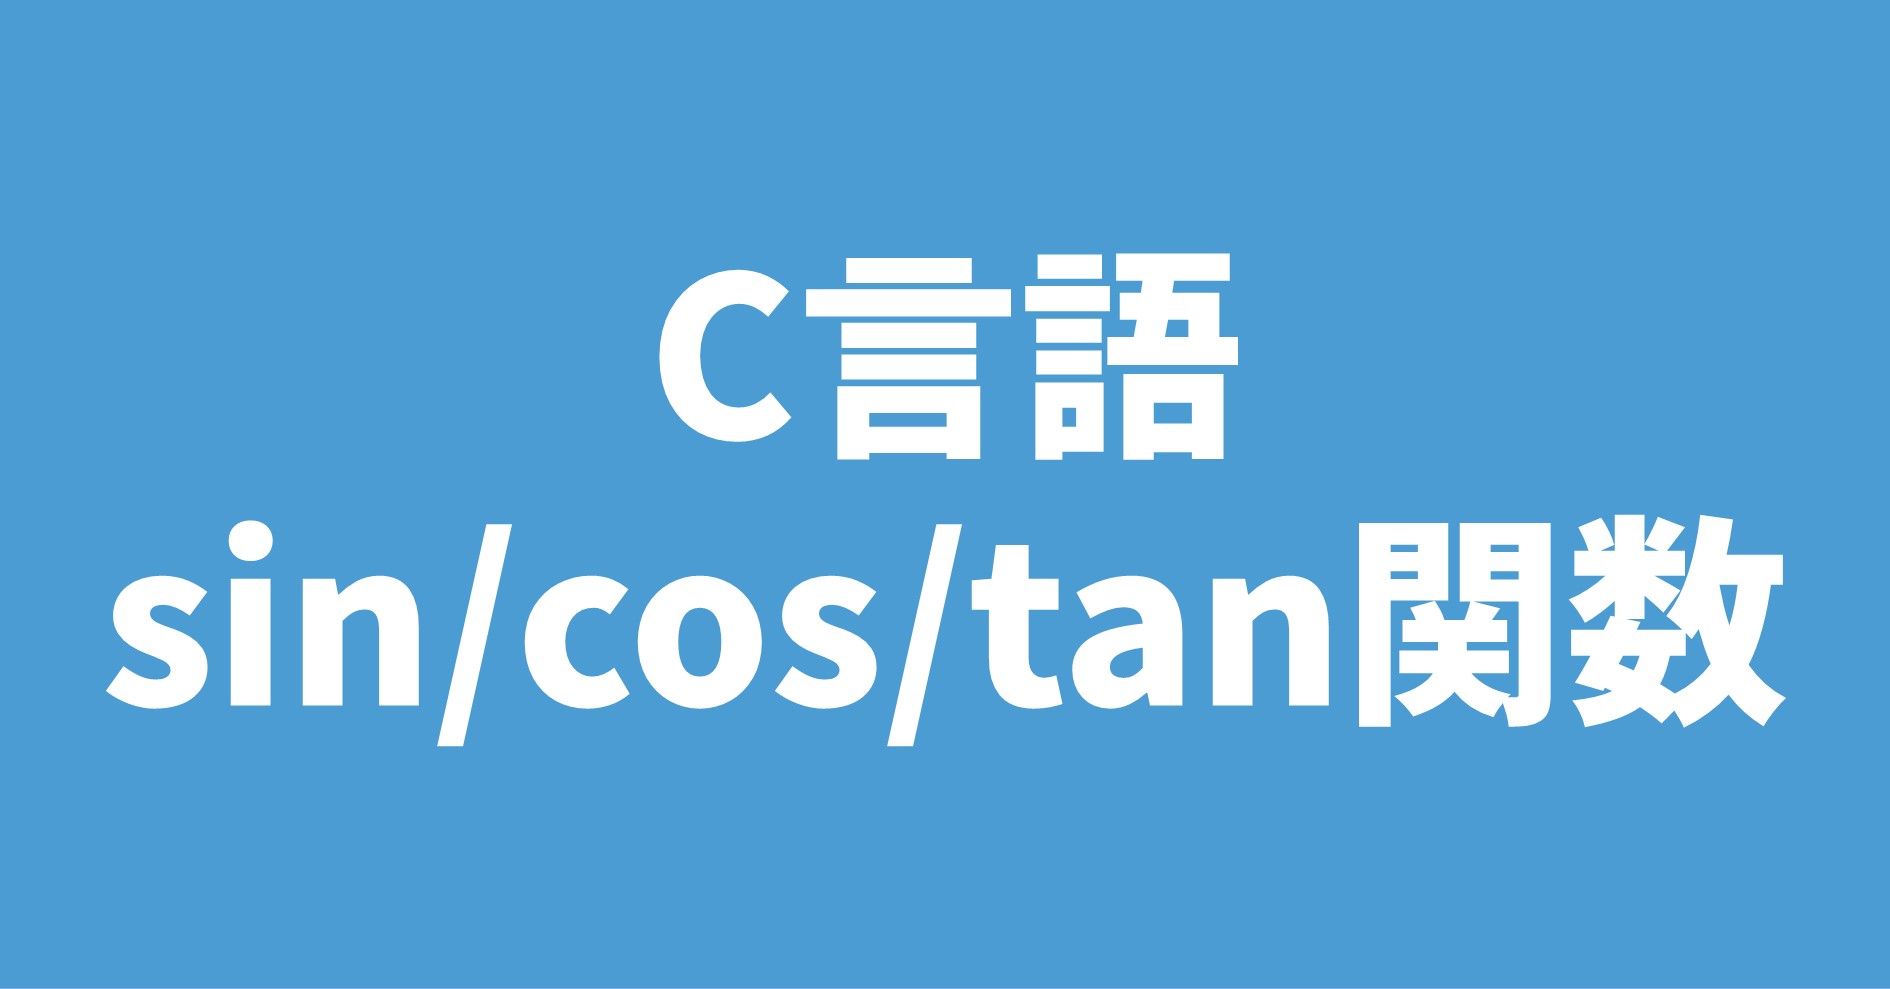 C言語 sin/cos/tan関数